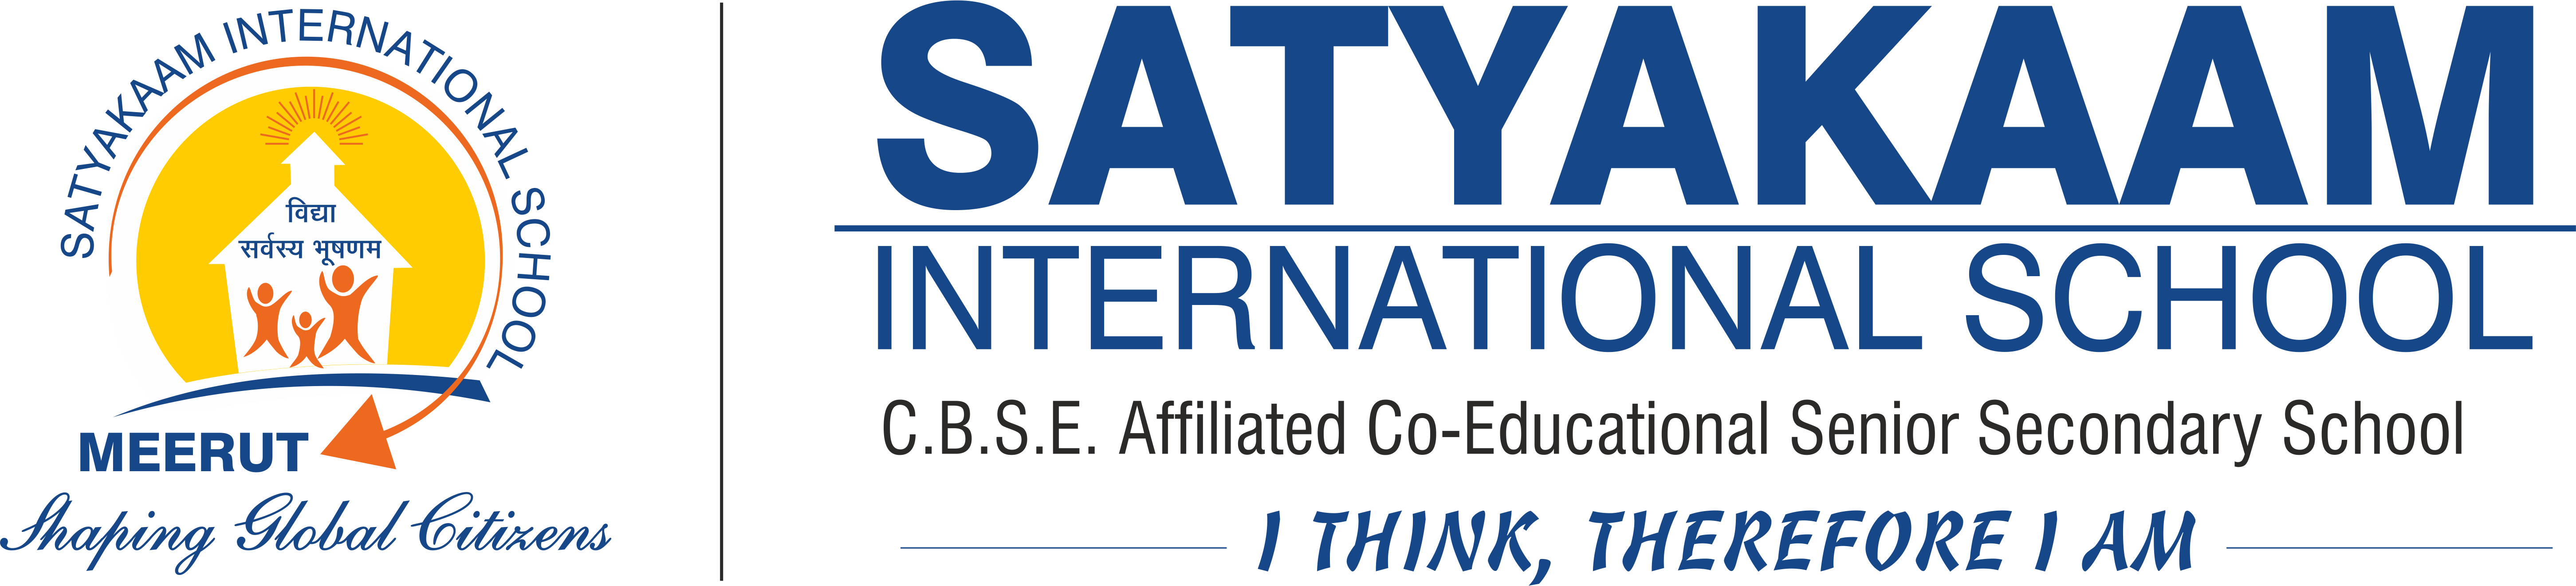 Satyakaam International School